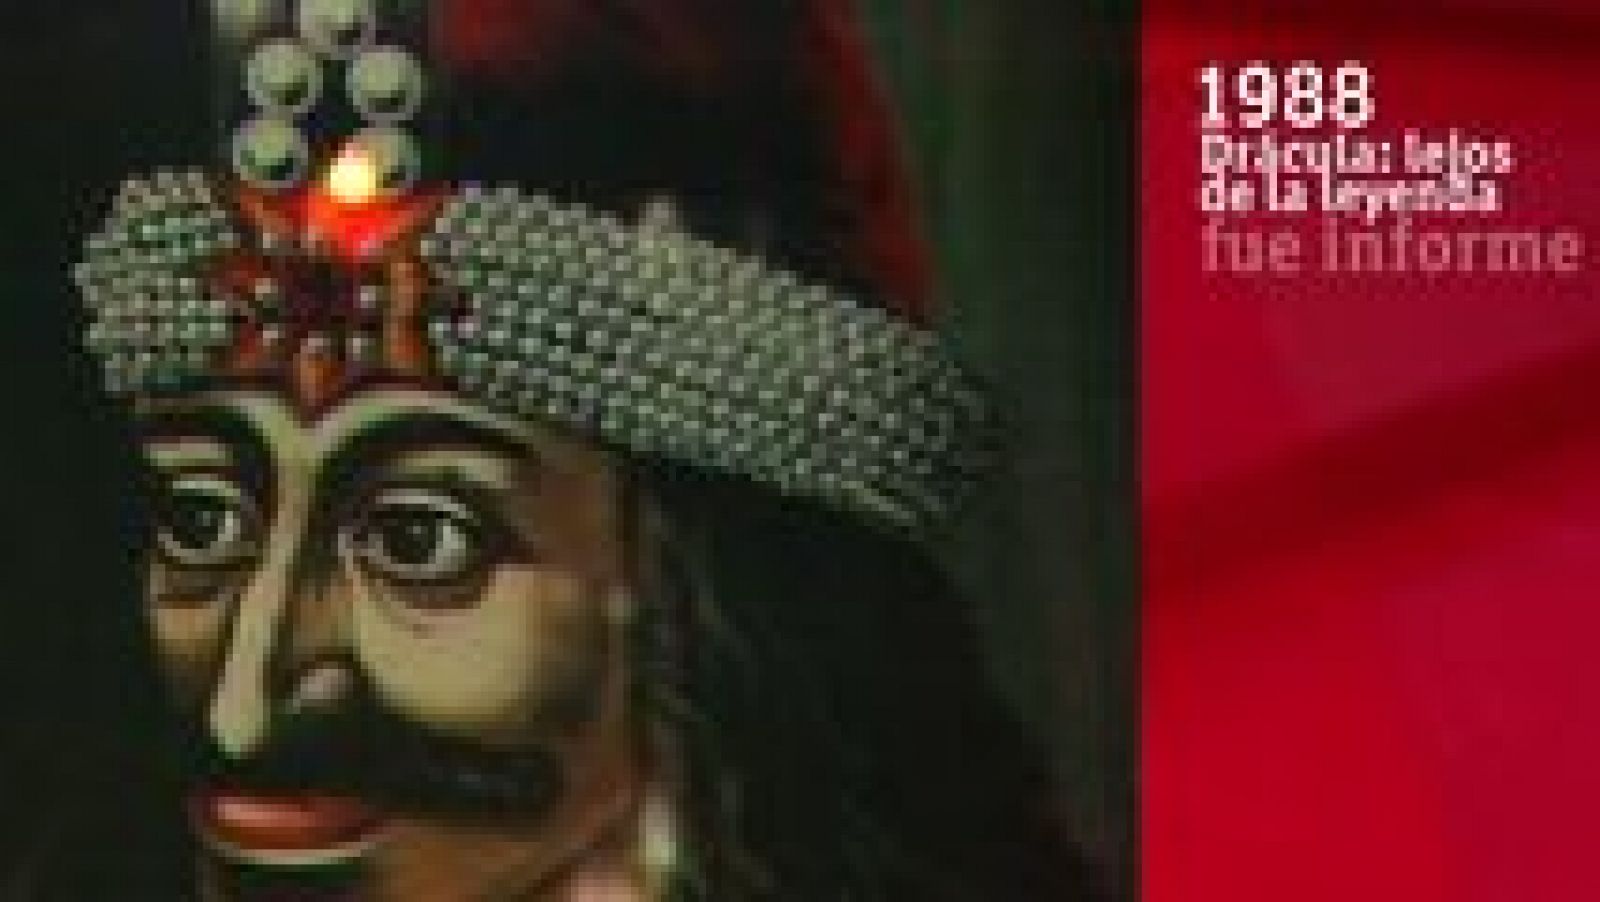 Informe Semanal: Drácula, lejos de la leyenda (1988) | RTVE Play